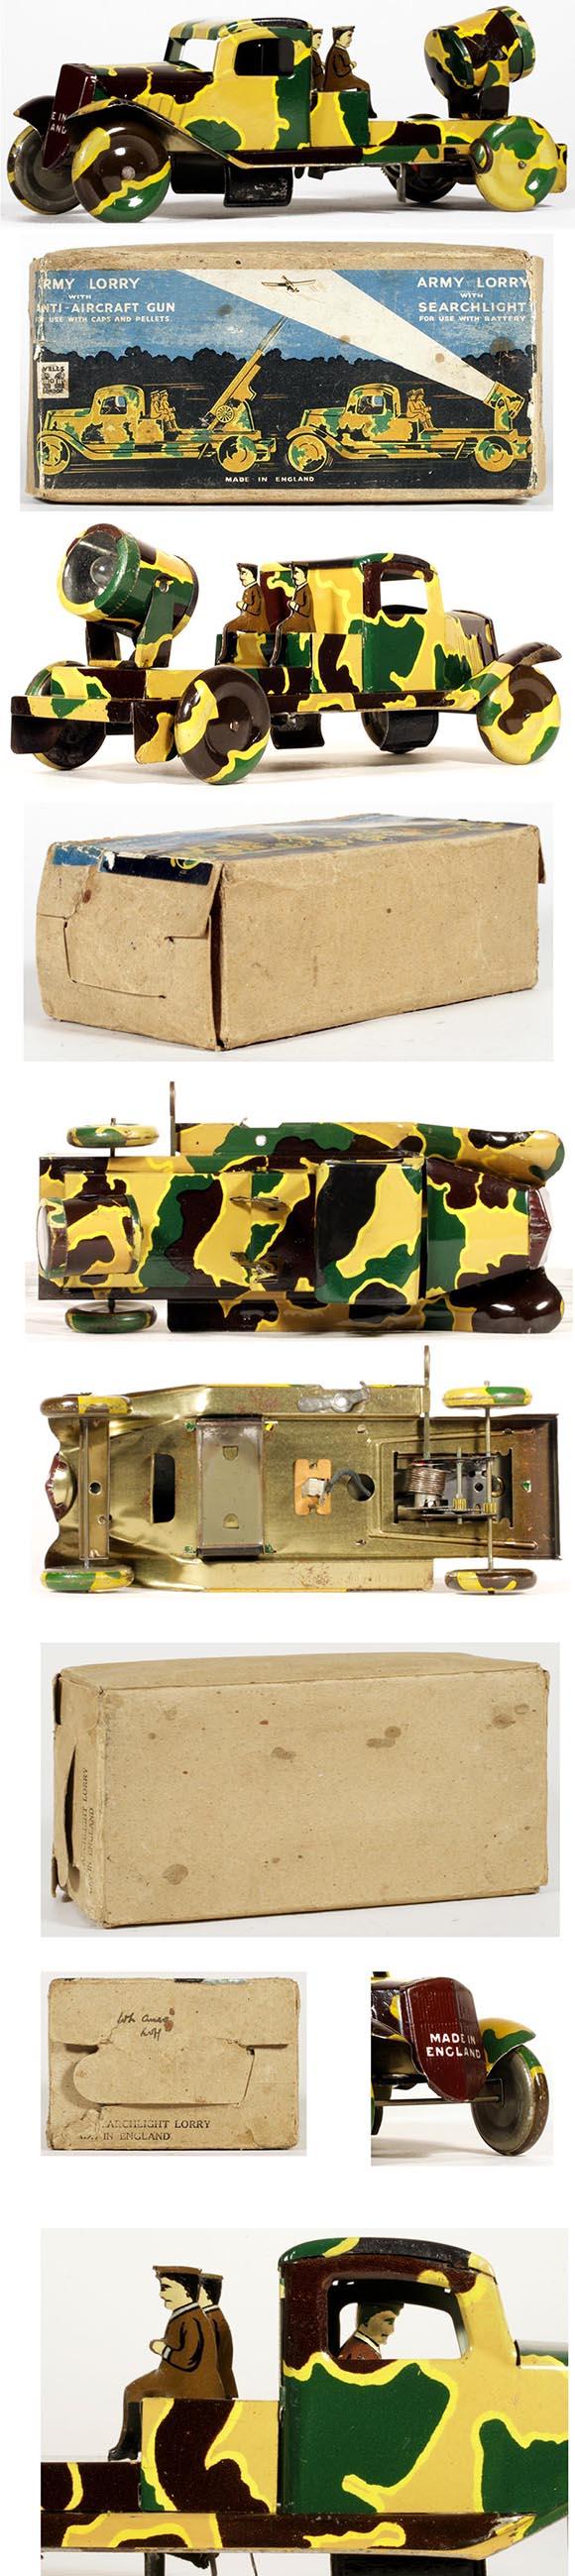 1940 Wells-Brimtoy, Camouflaged Army Lorry in Original Box